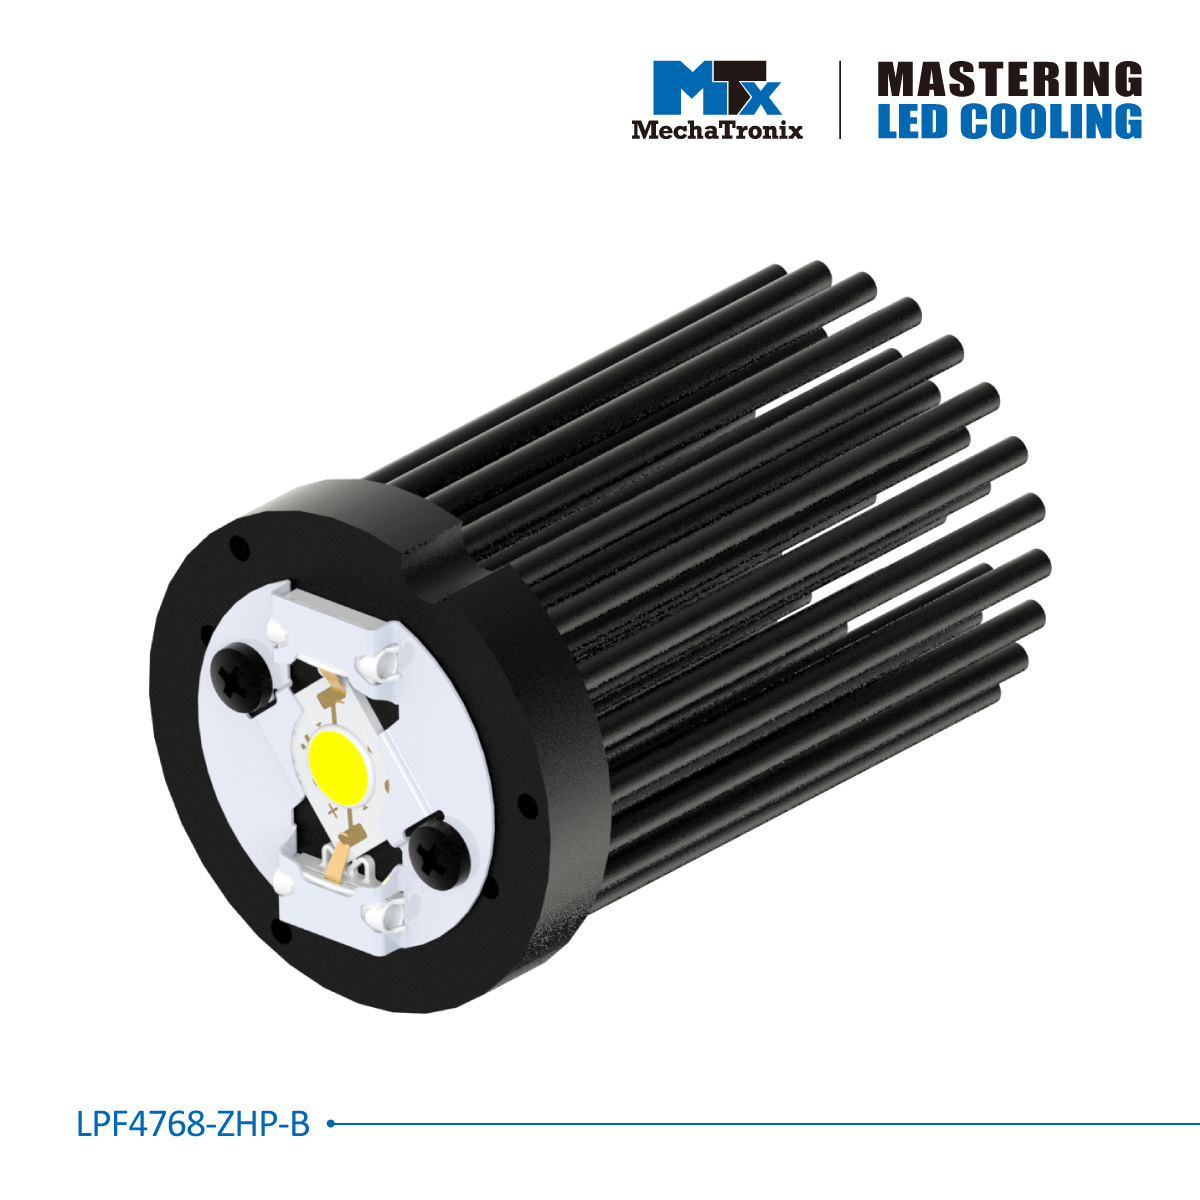 MechaTronix Heat Sink round 5cm LPF4768-ZHP-B for LED <2500lm